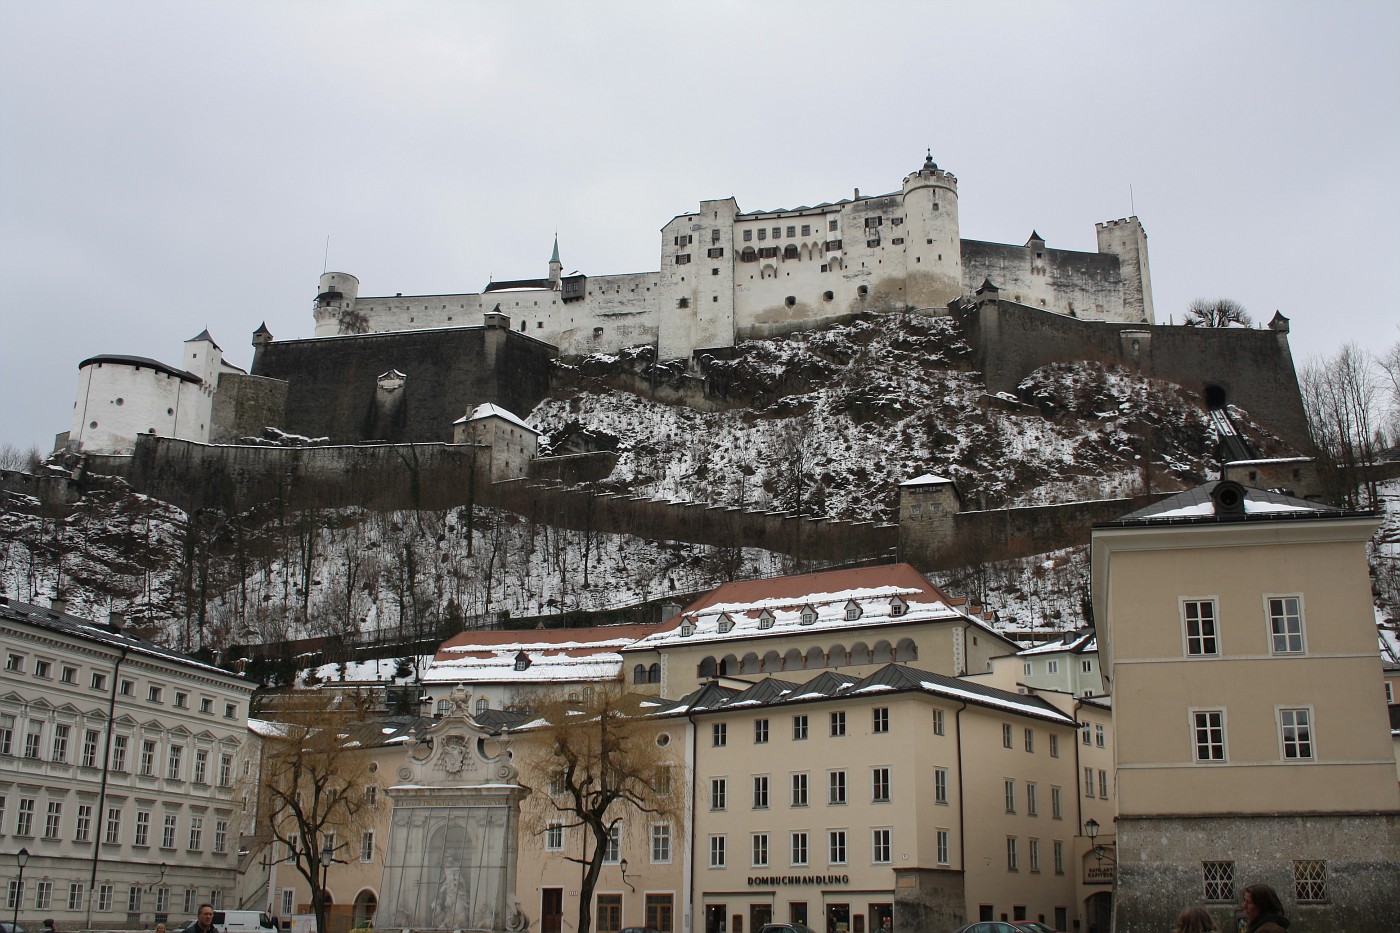 http://images54.fotki.com/v1592/photos/2/243162/8488810/Salzburg41-vi.jpg